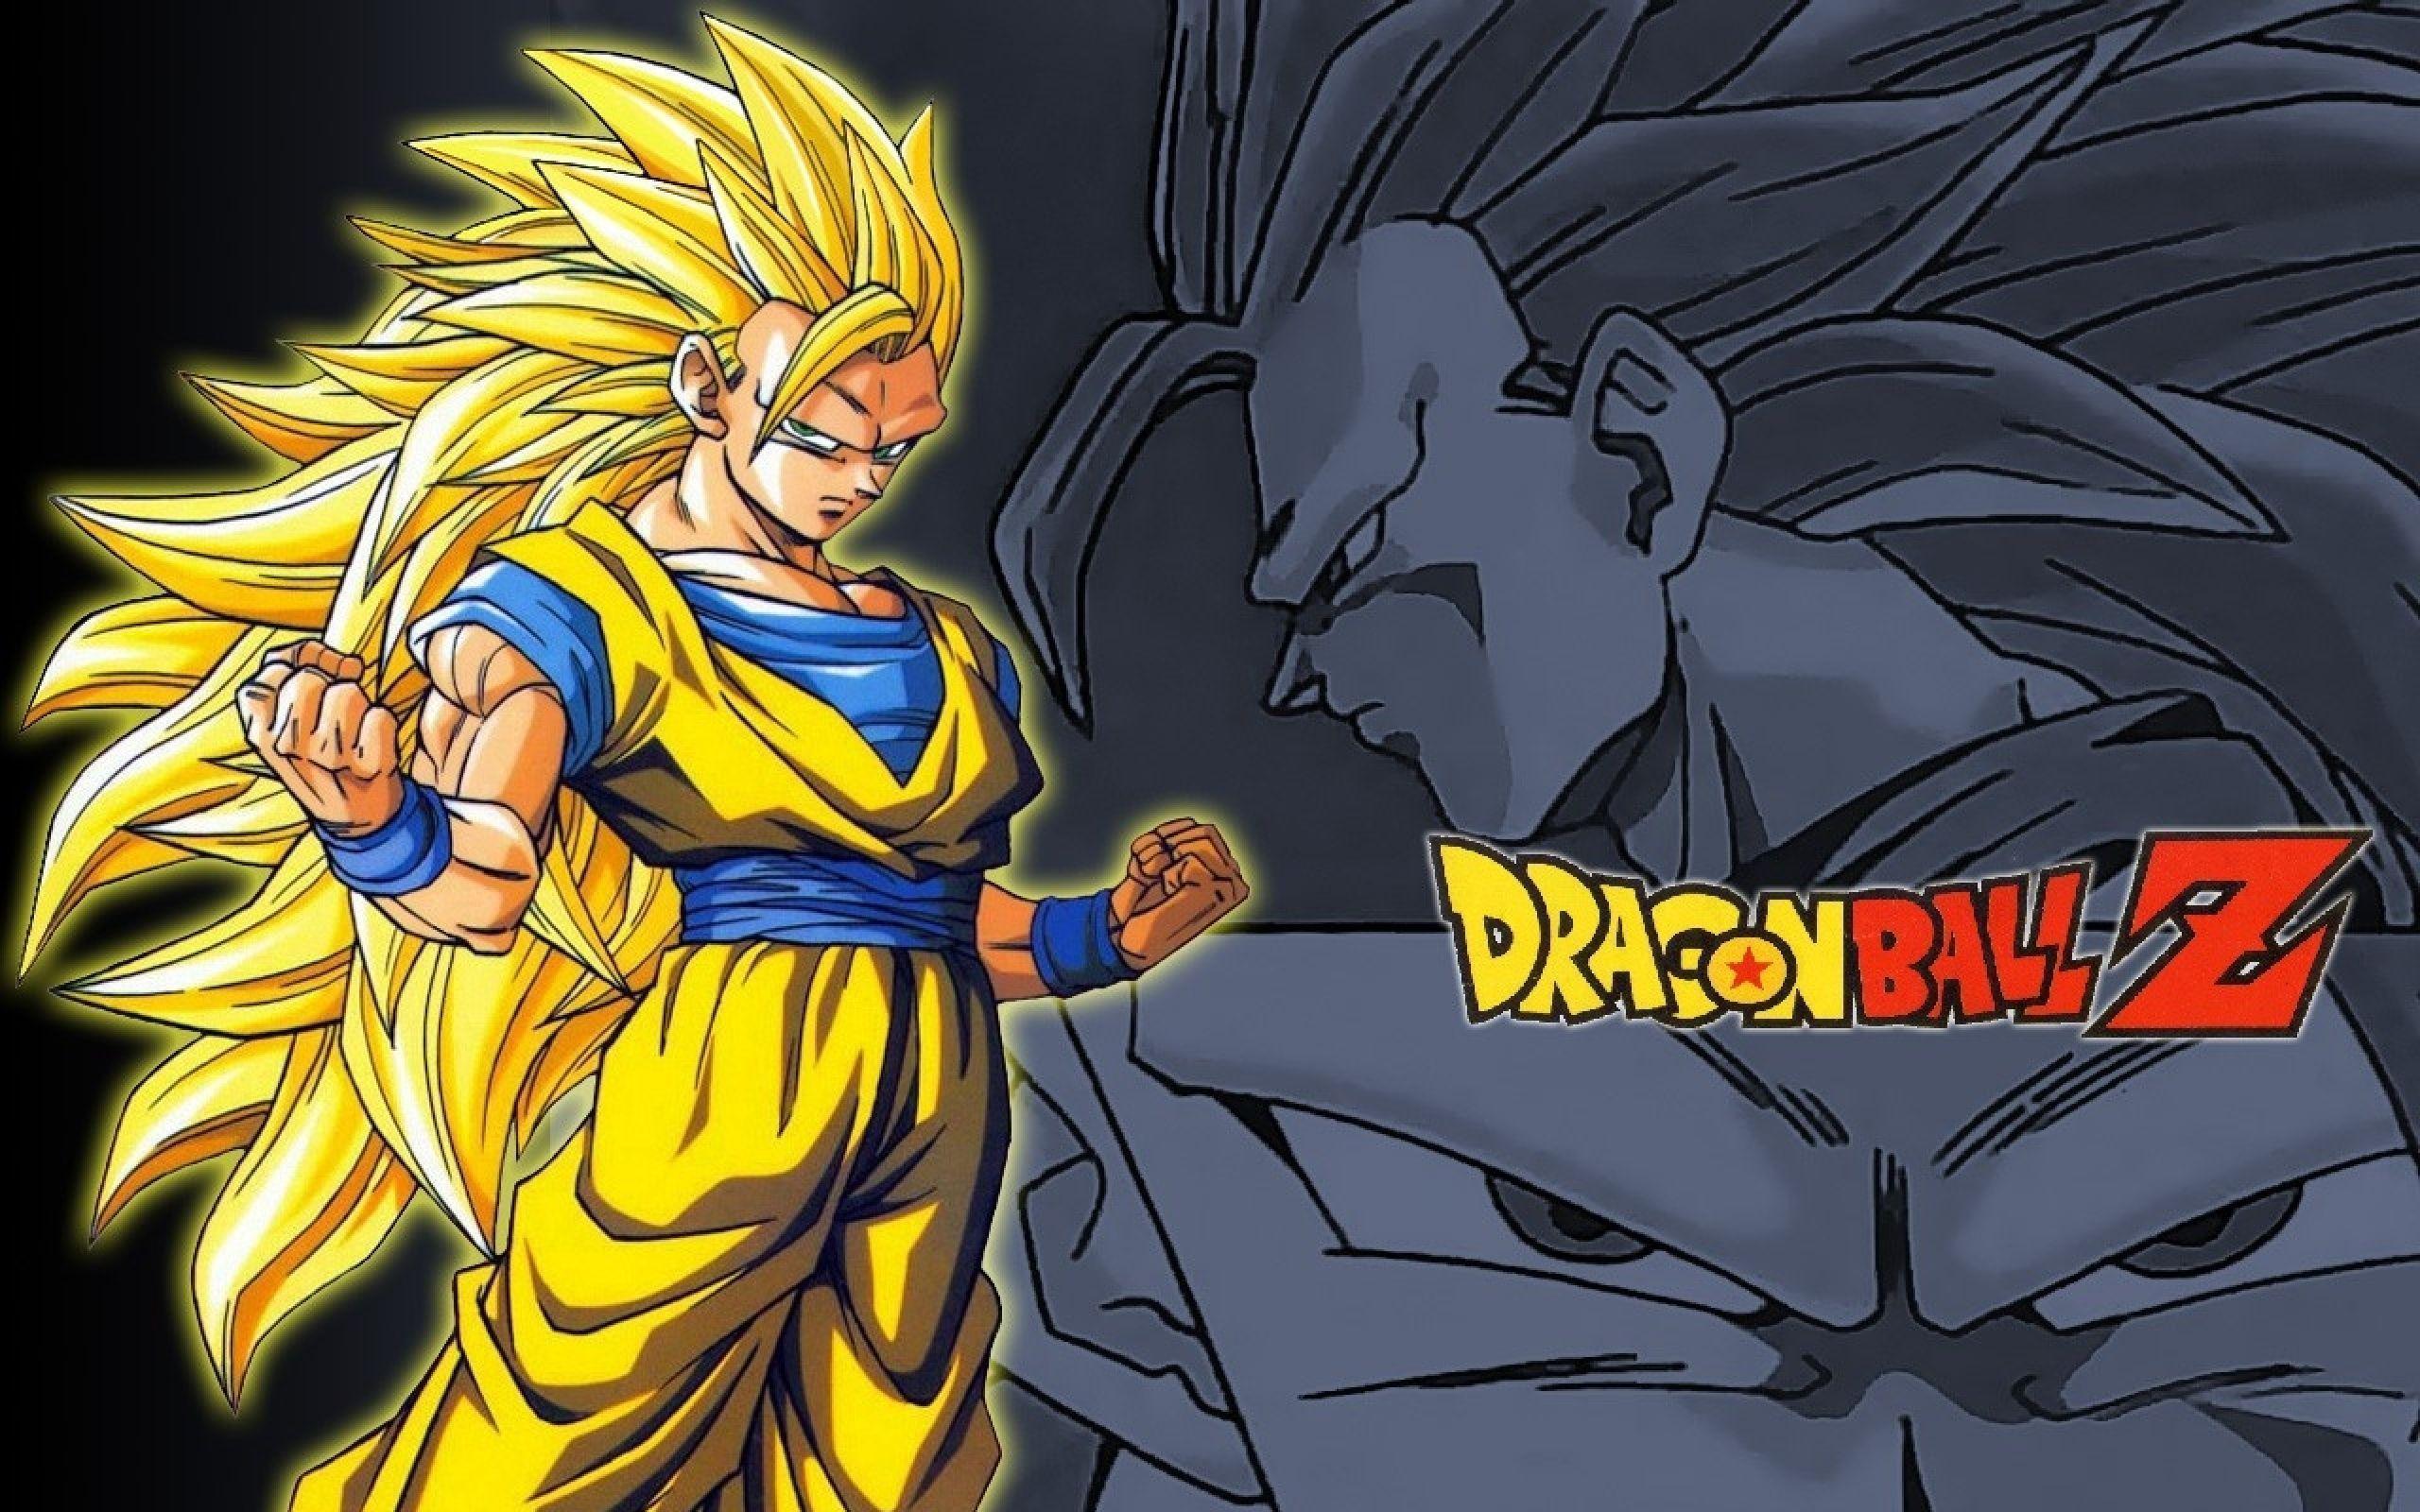 Goku Super Saiyan Wallpaper